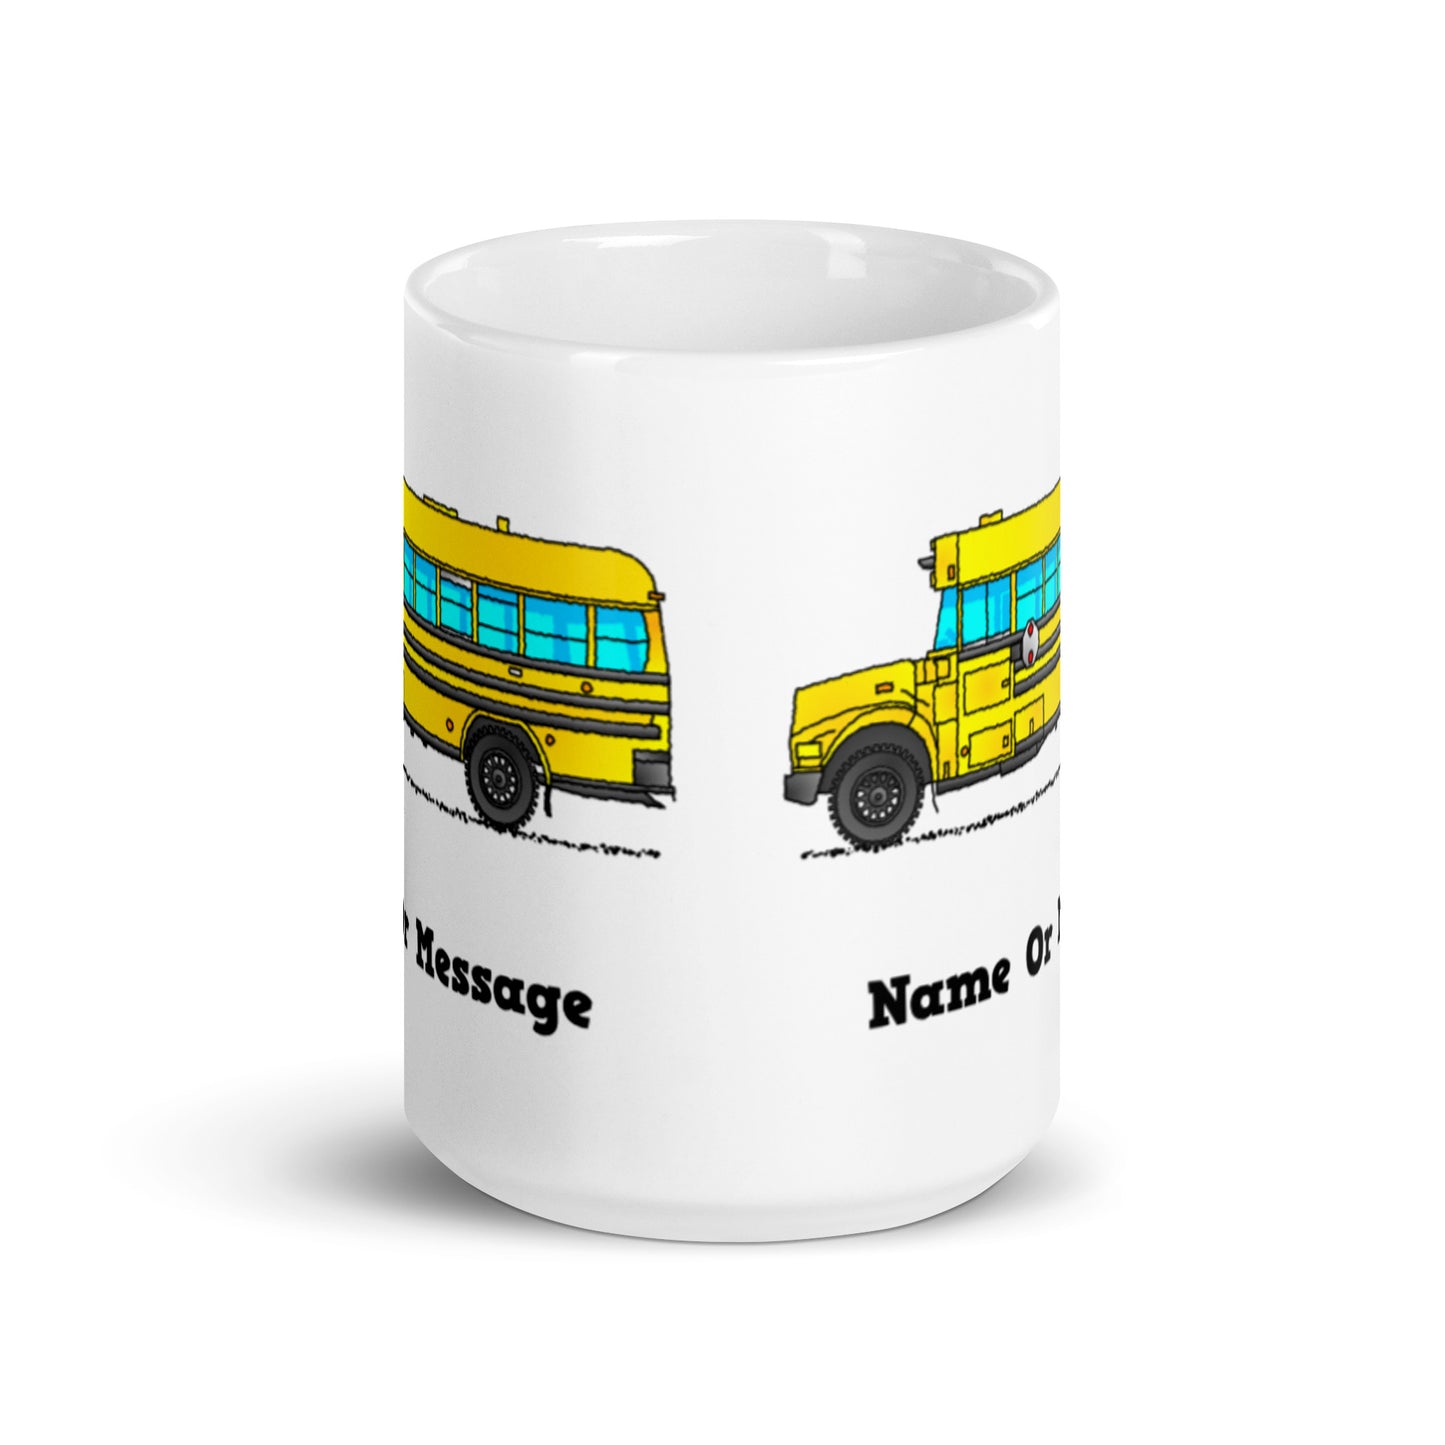 Personalized Yellow American School Bus Mug